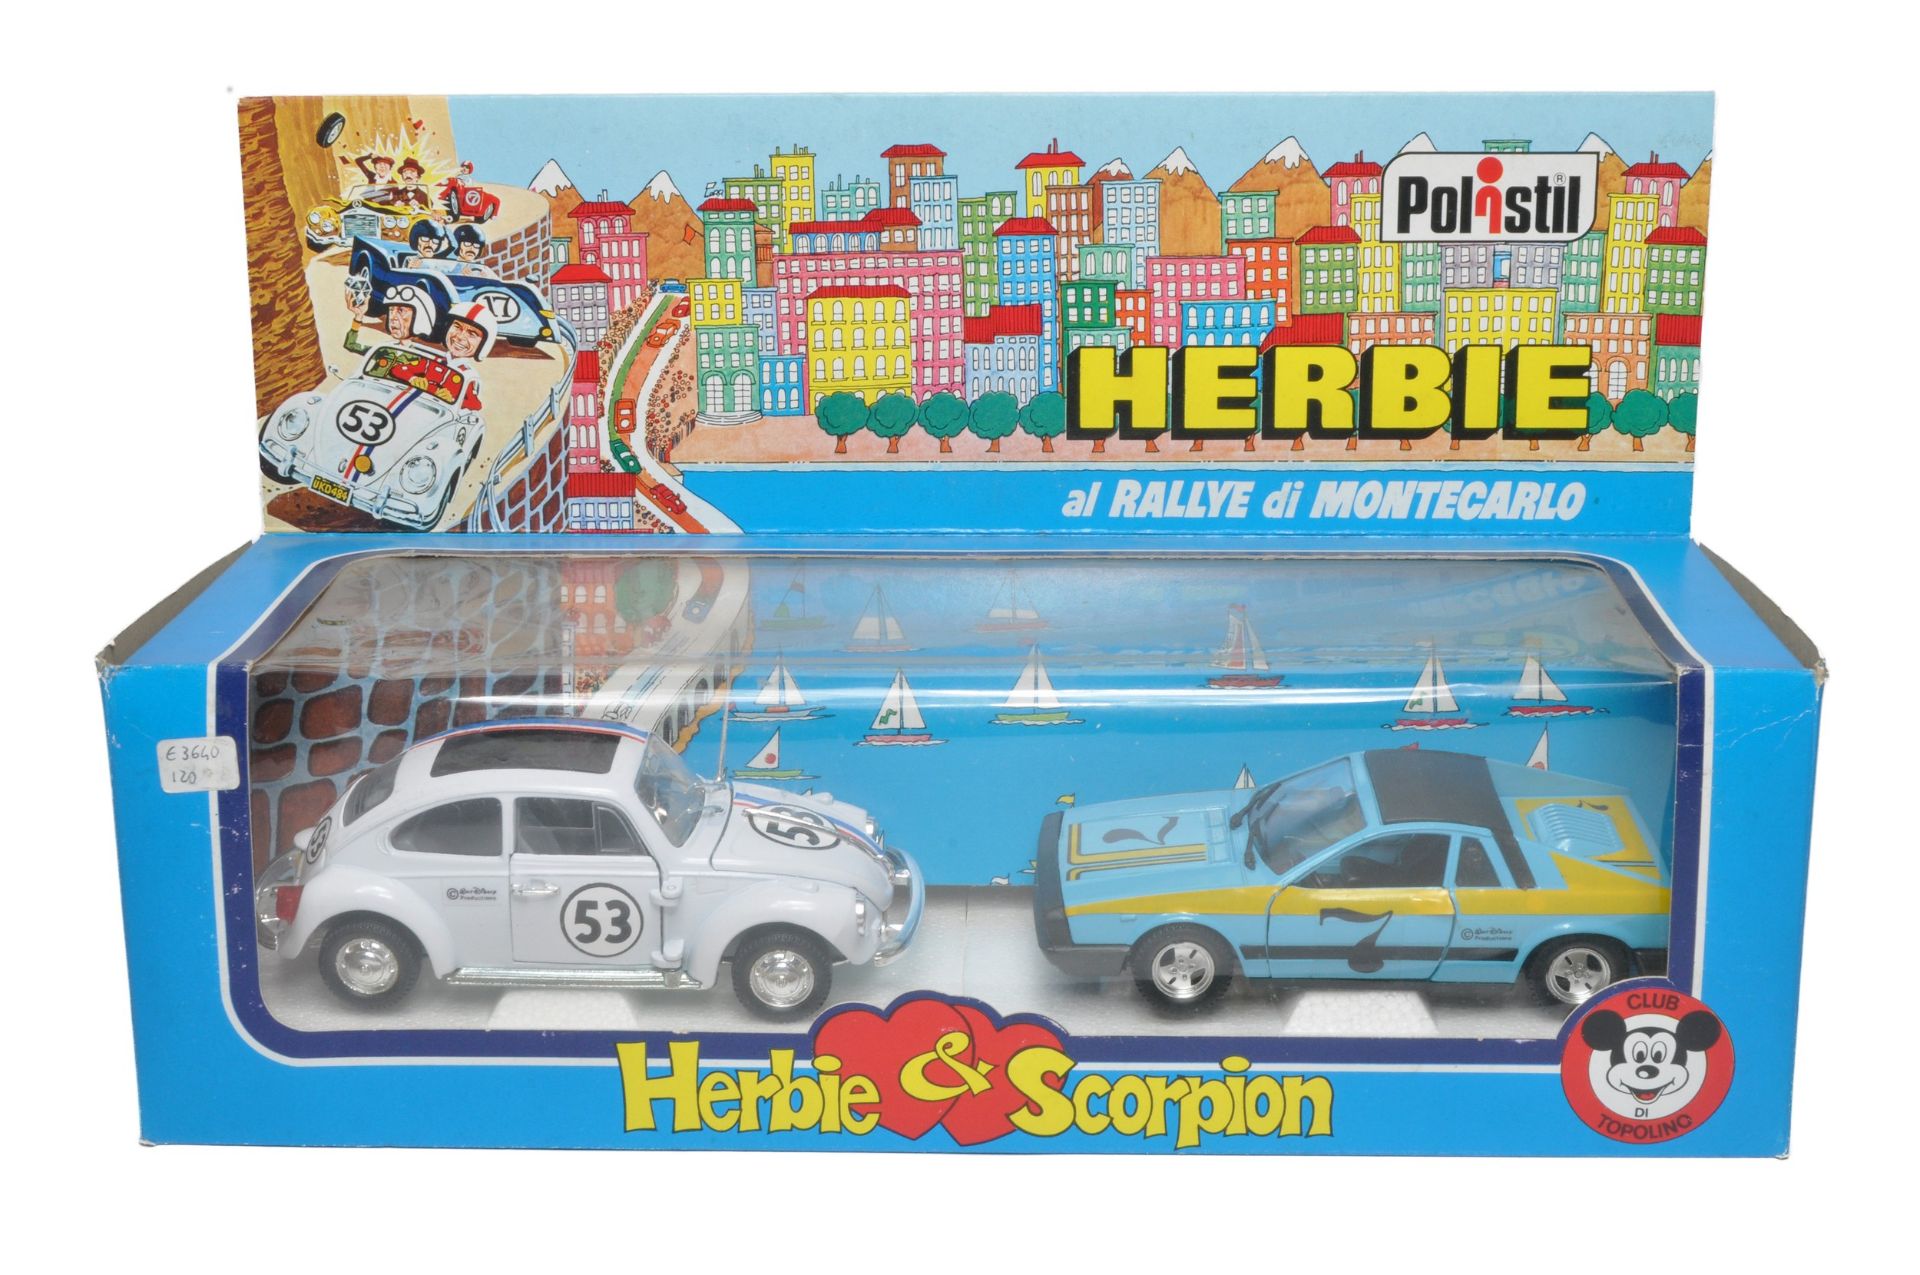 Polistil 1/24 No. W11 Walt Disney Herbie and Scorpion Rallye di Montecarlo twin set. Comprising